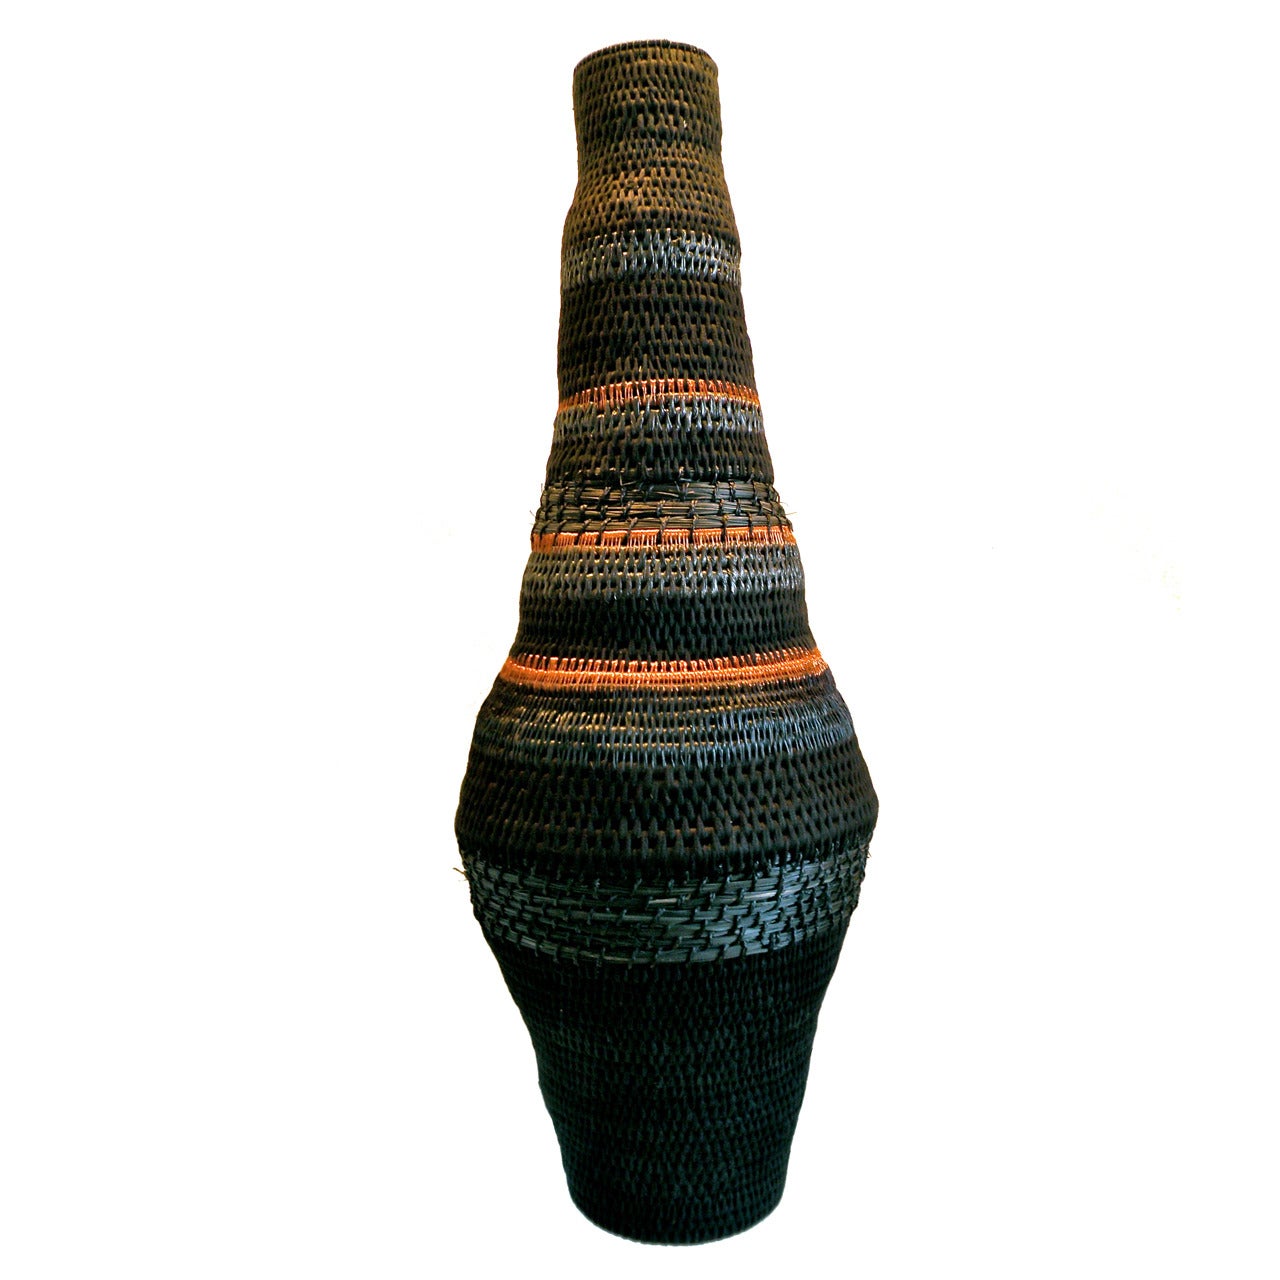 Large Woven Sculptural Vase